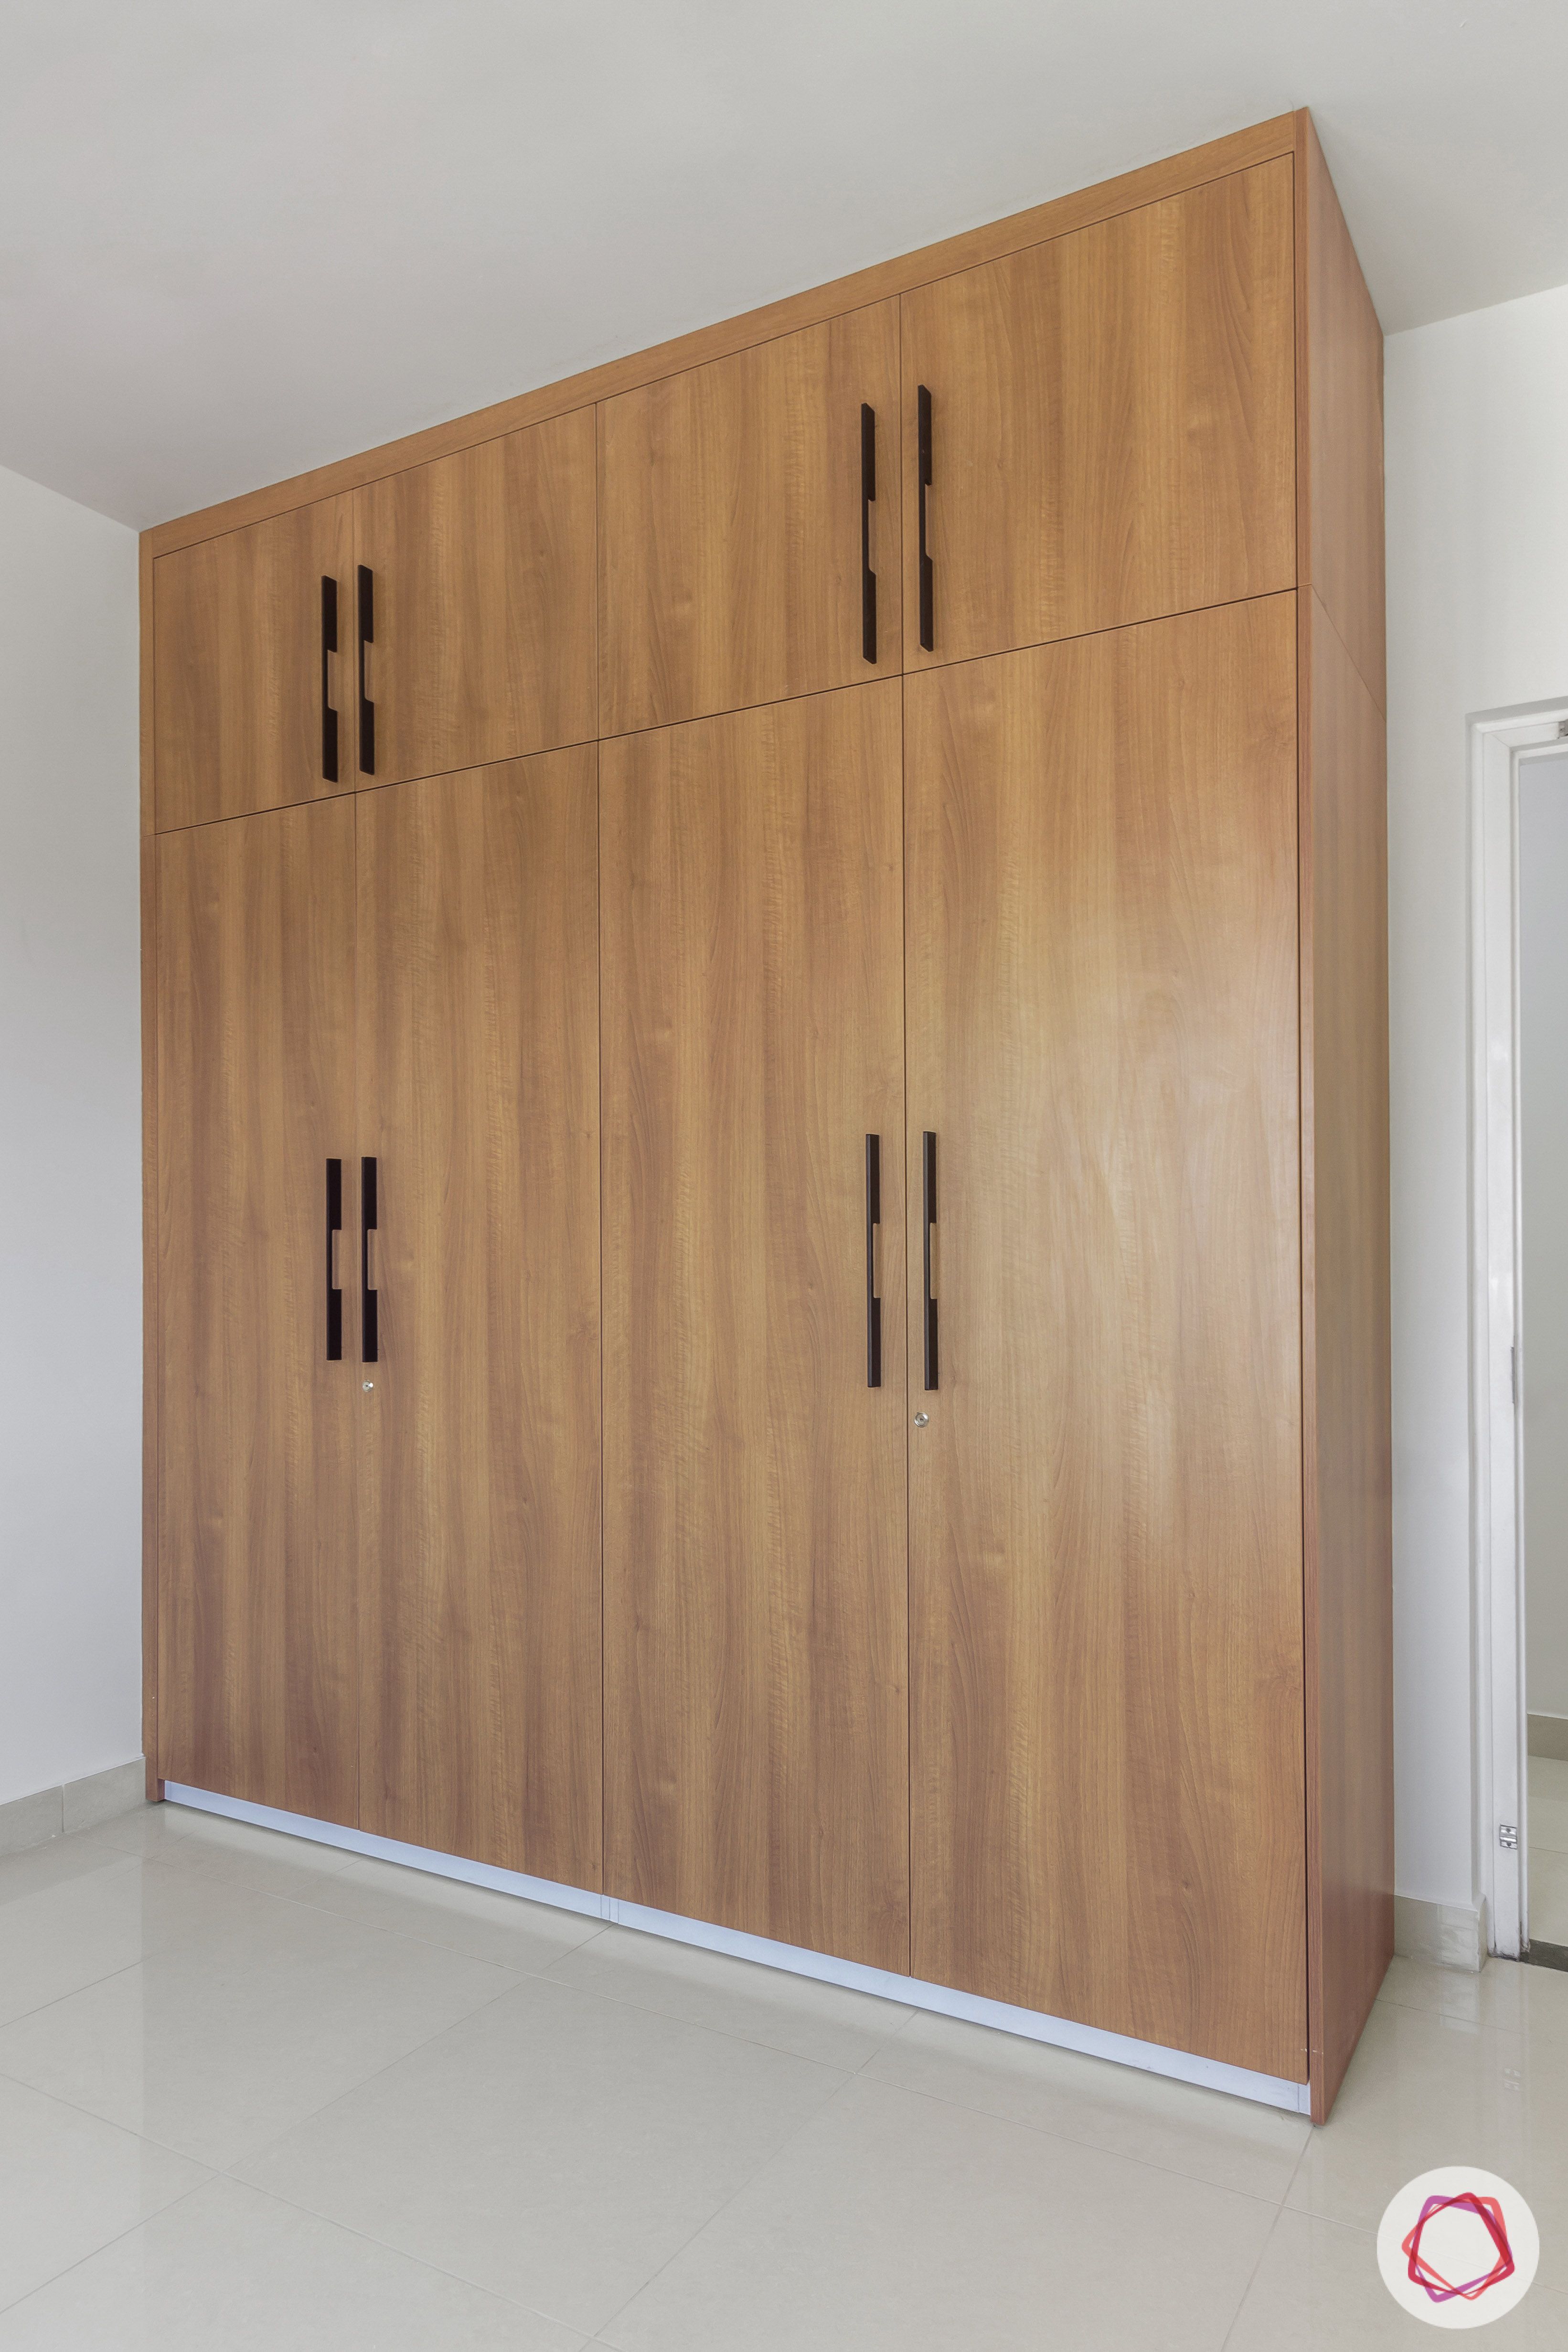 brigade northridge-wardrobe design for bedroom-bedroom storage ideas-laminate finish wardrobe